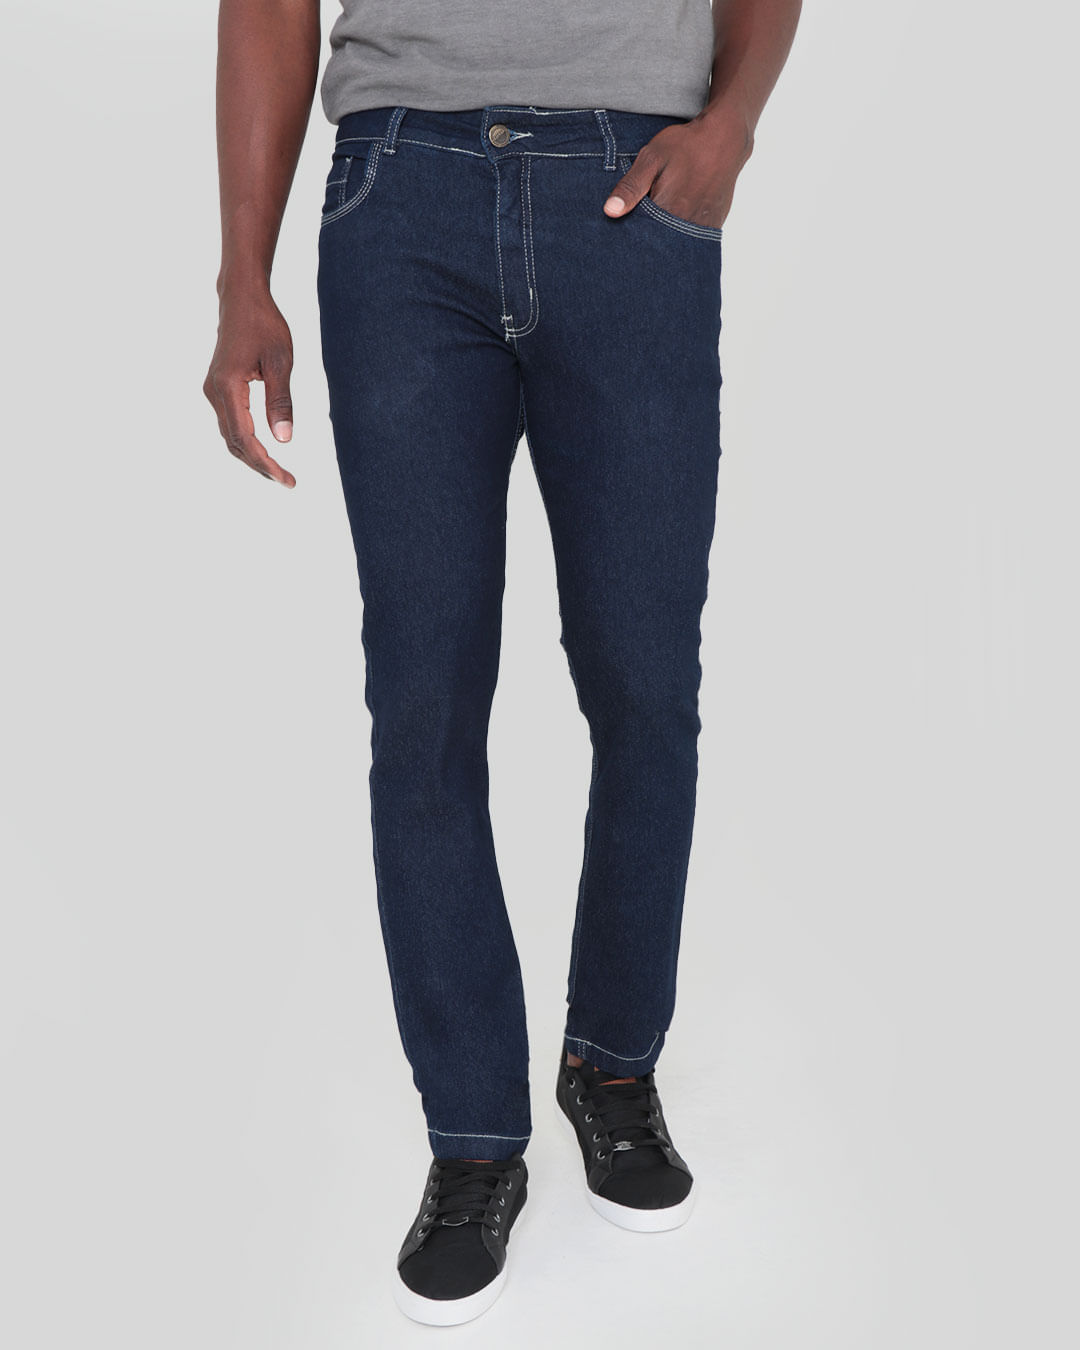 Calca-Jeans-Masculina-Reta-Azul-Escuro